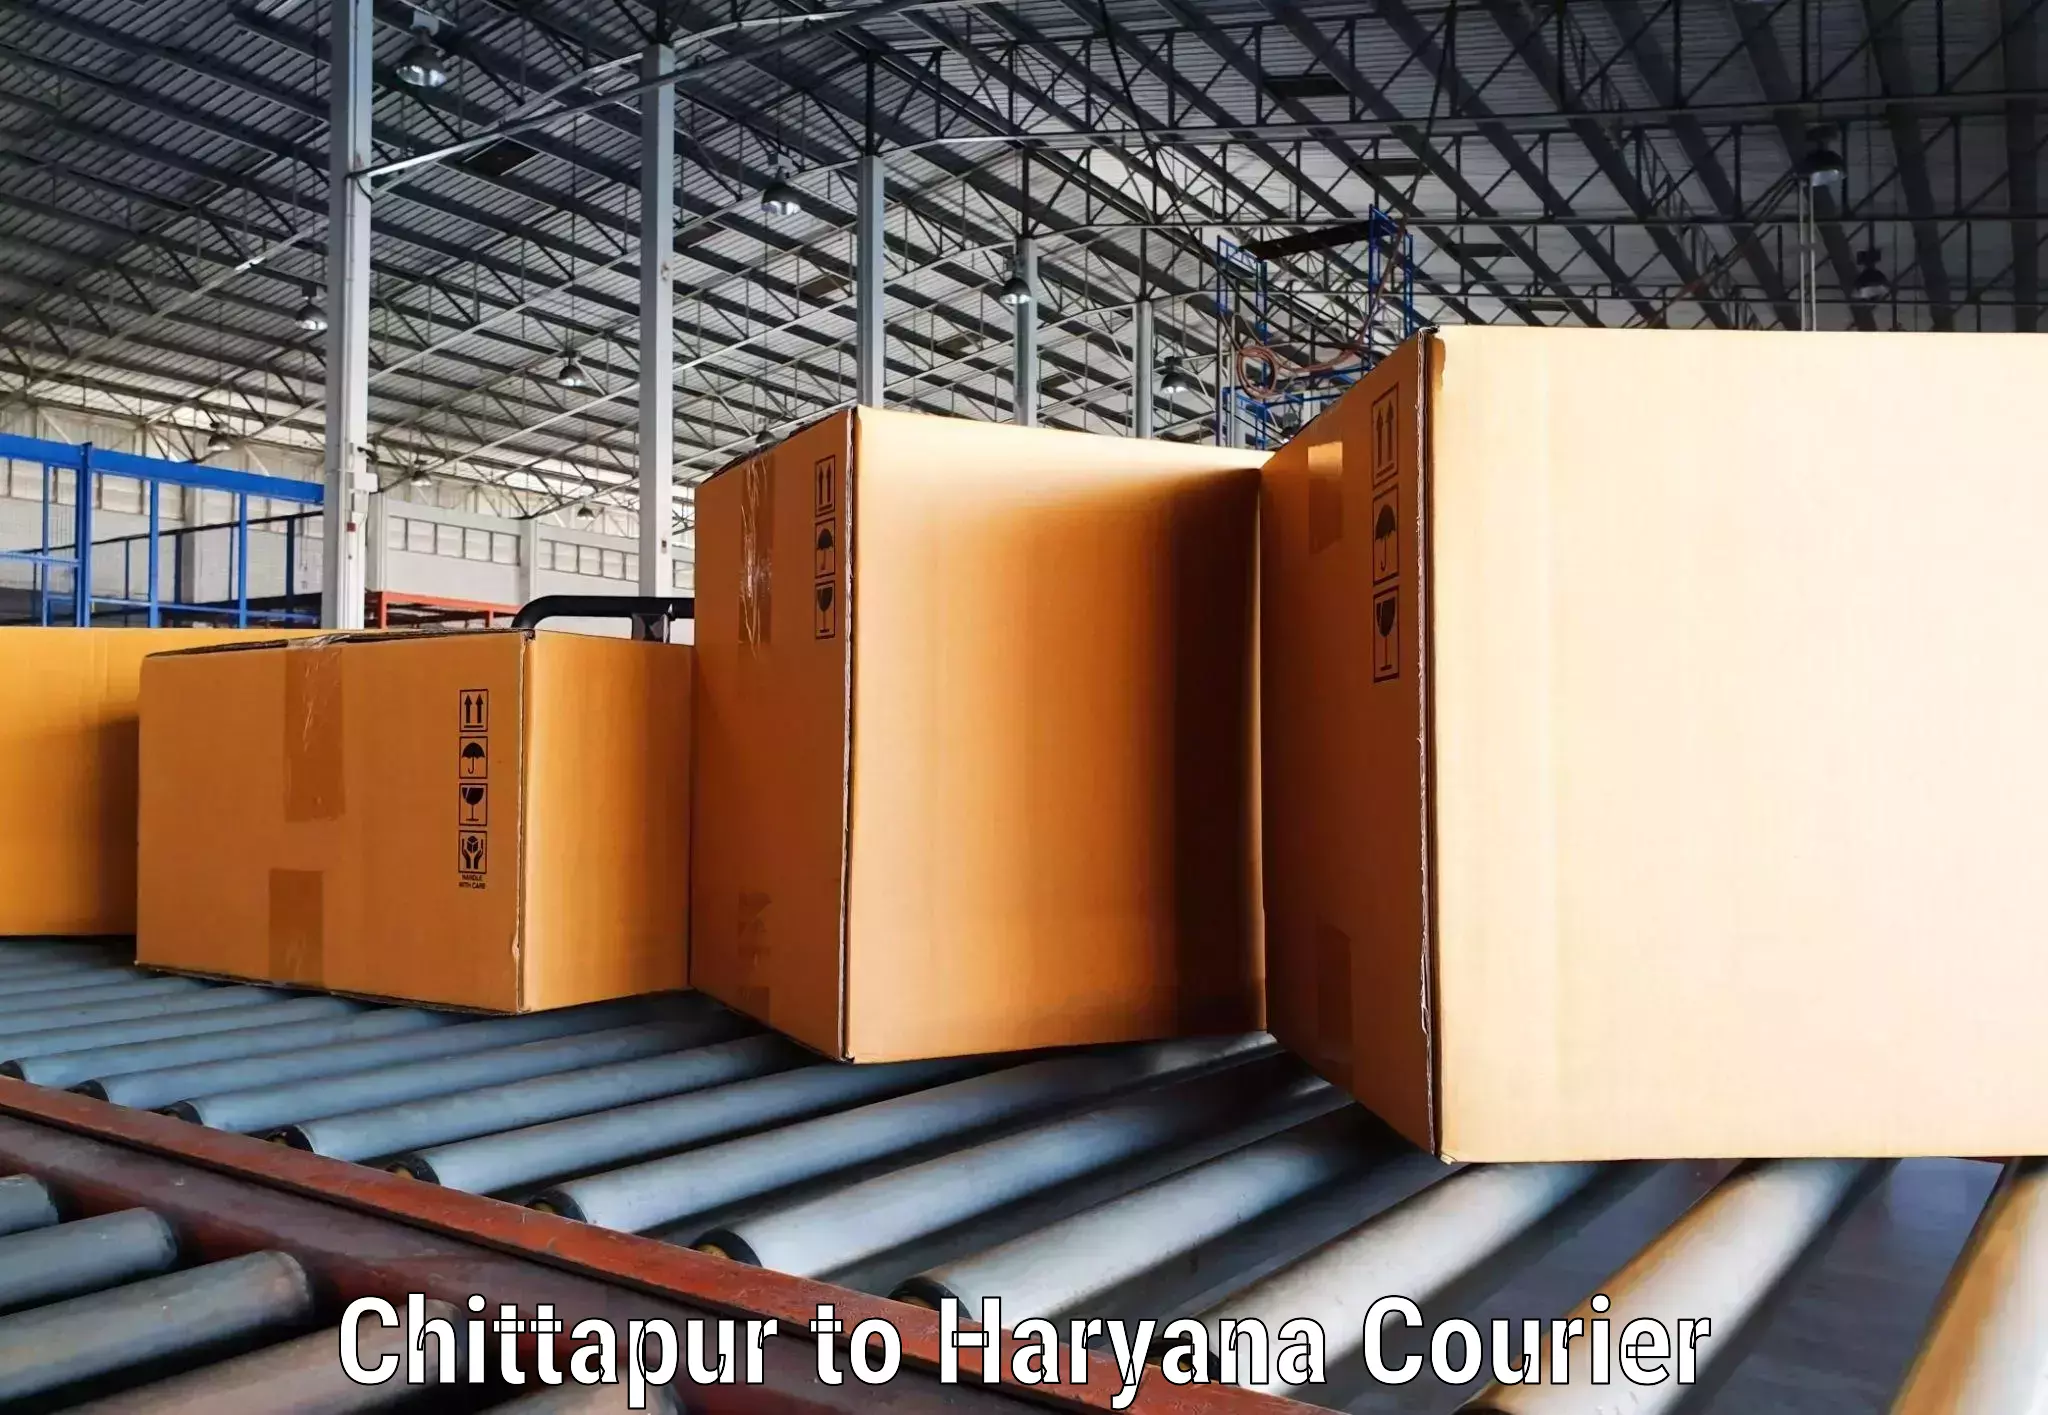 Courier service partnerships Chittapur to Panchkula